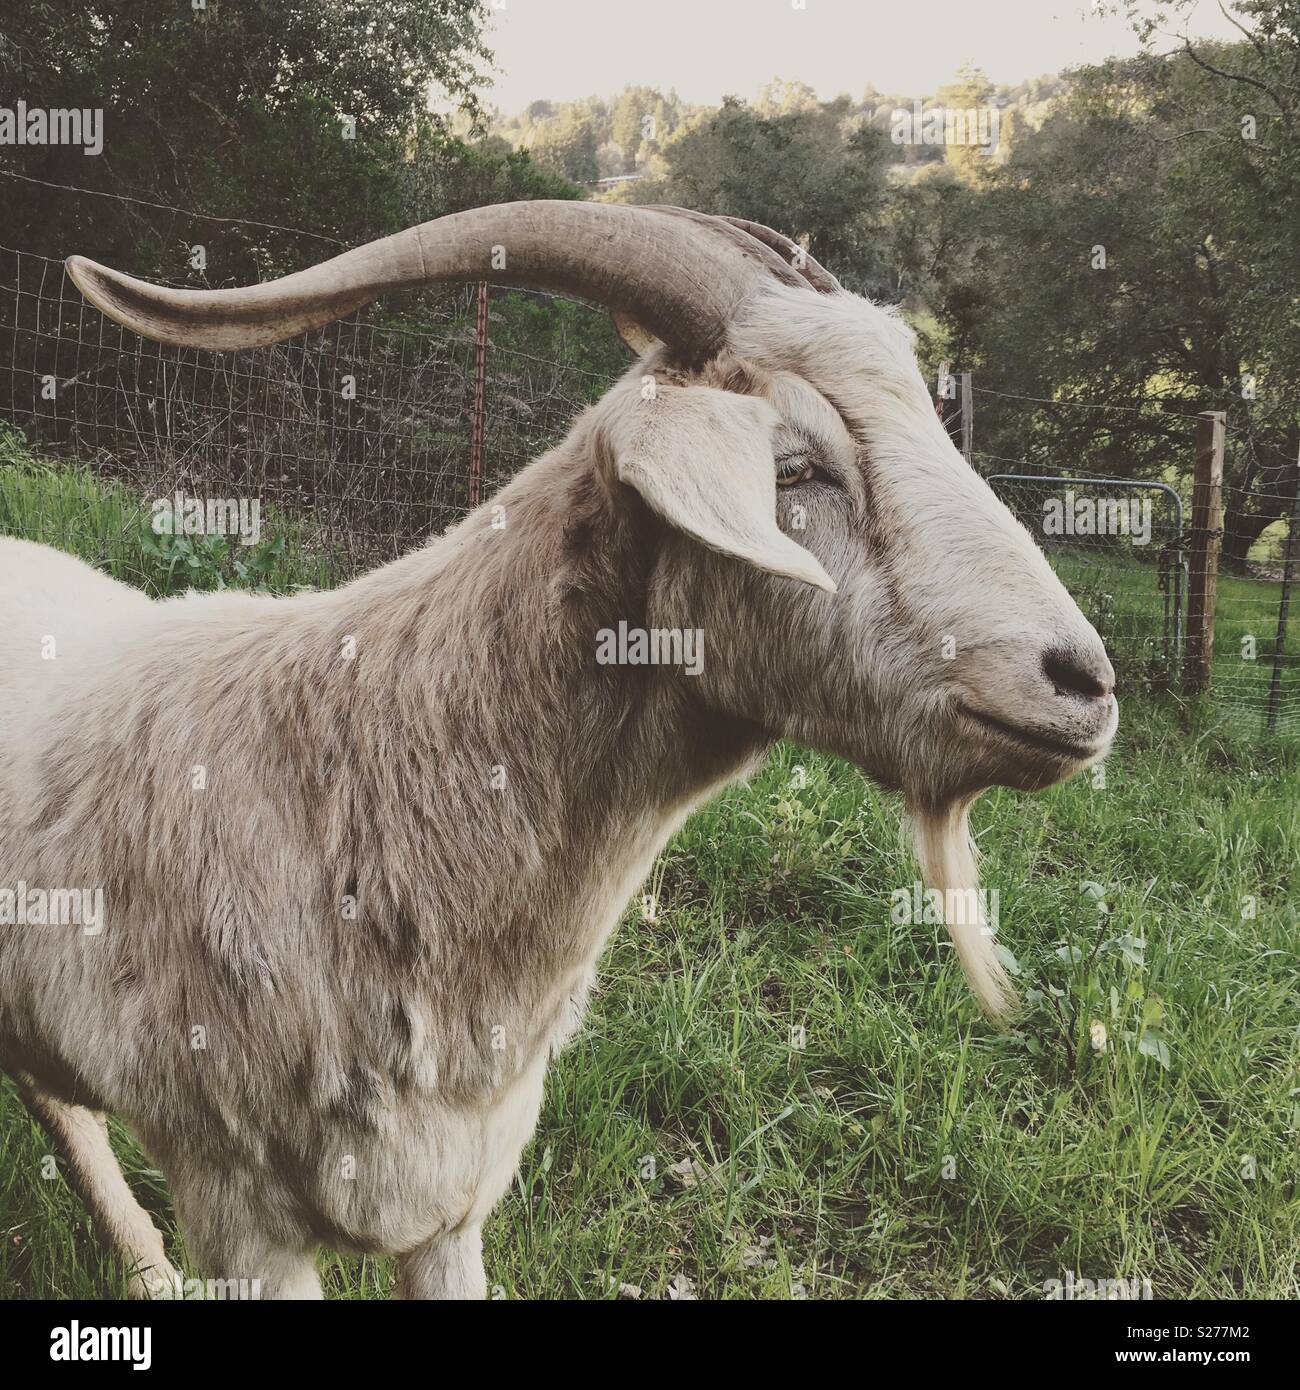 A goat on a farm. Stock Photo